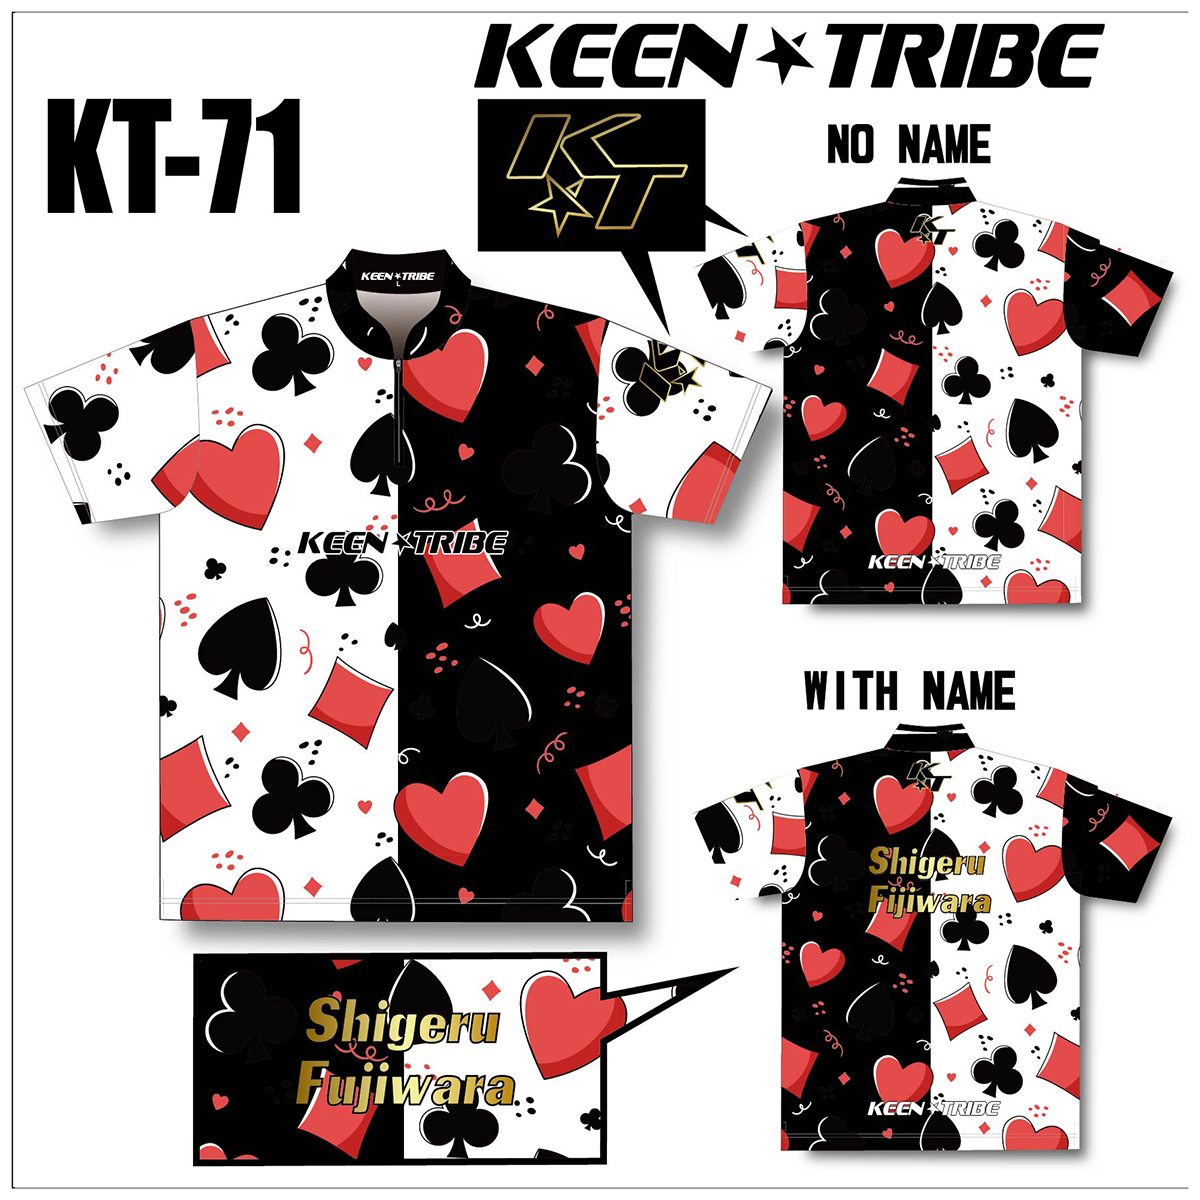 KEEN ★ TRIBE　KT-71(受注生産)【特別価格】